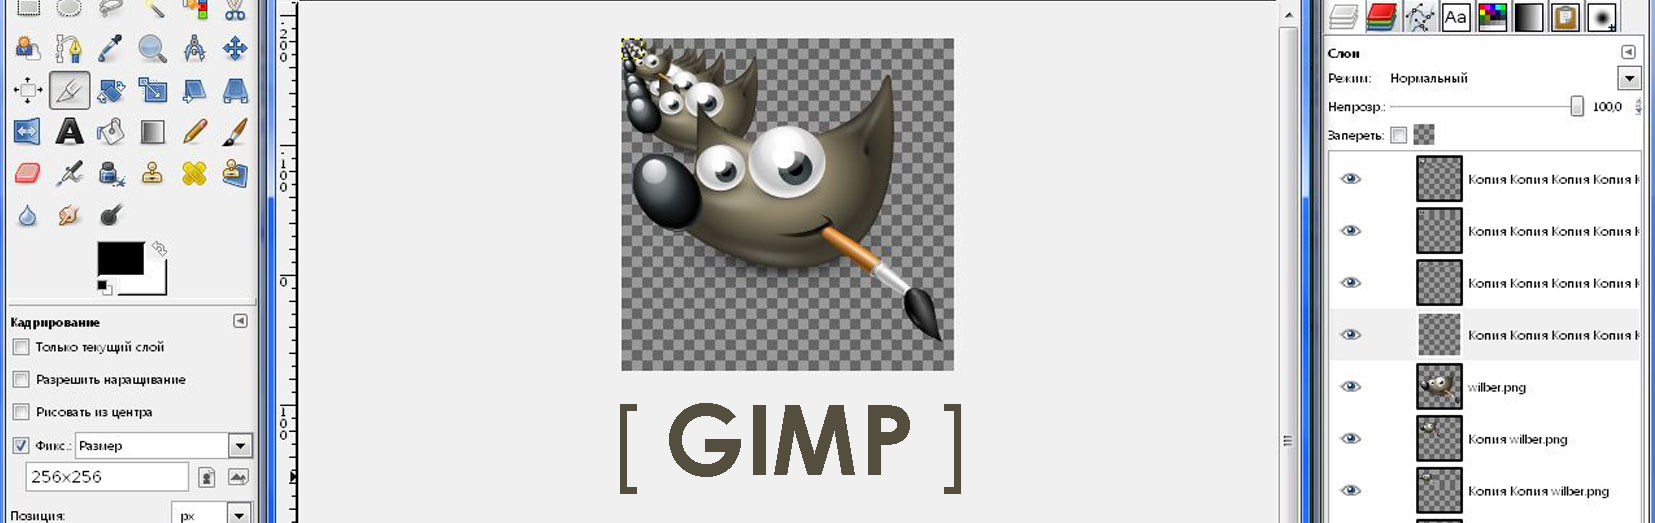 gimp vs photoshop restoration